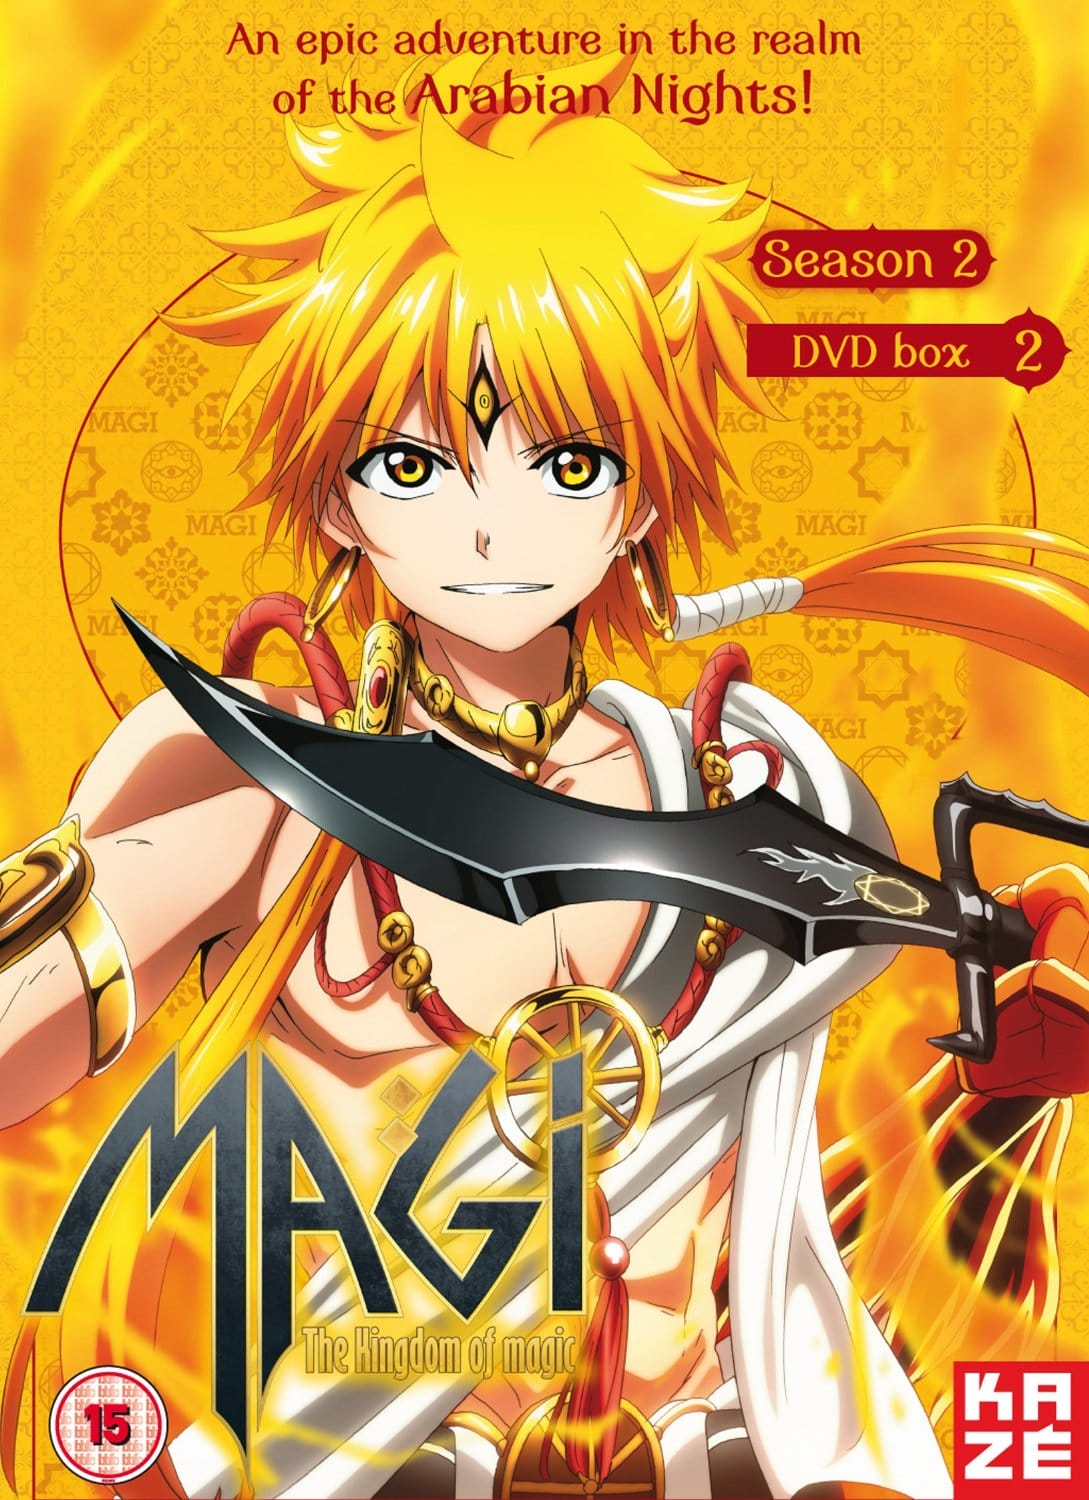  Review for Magi The Kingdom of Magic - Season 2 Part 2